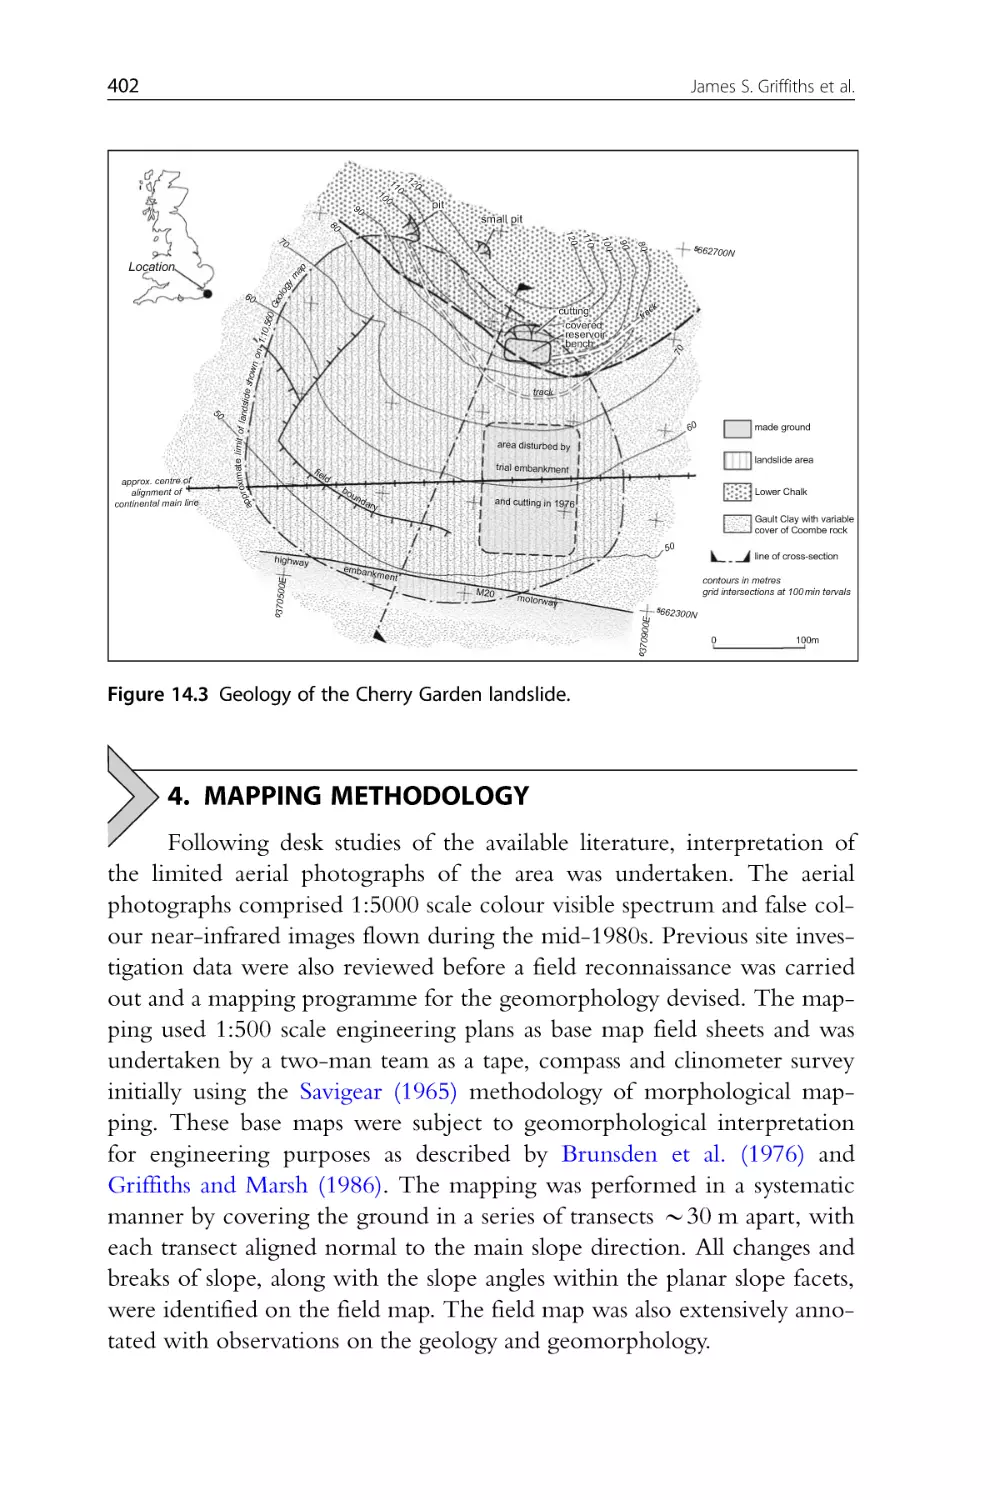 4. Mapping Methodology